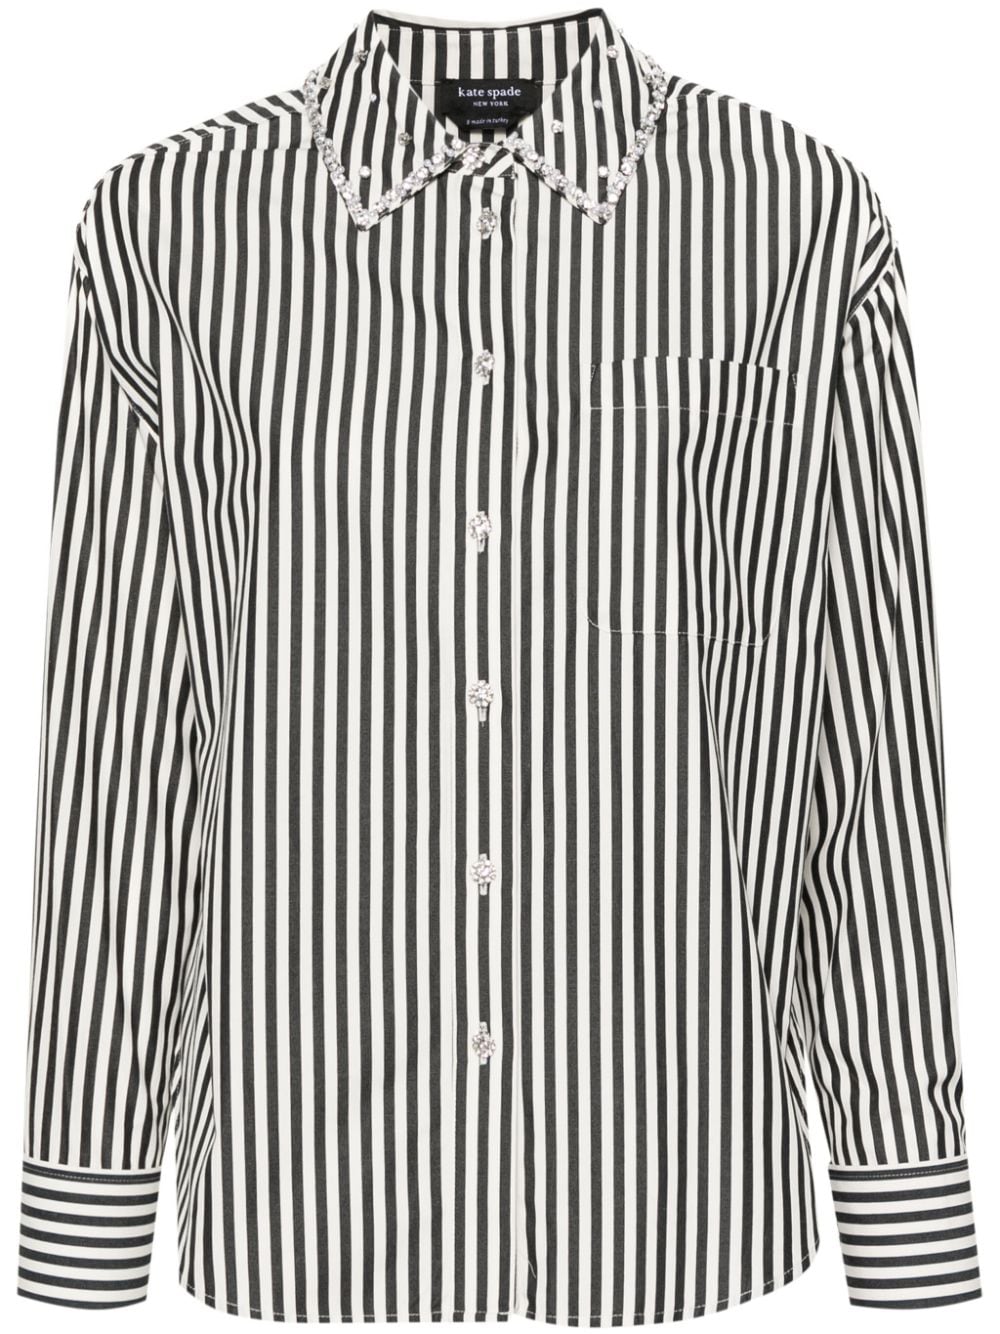 Kate Spade Acrobat striped shirt - Bianco